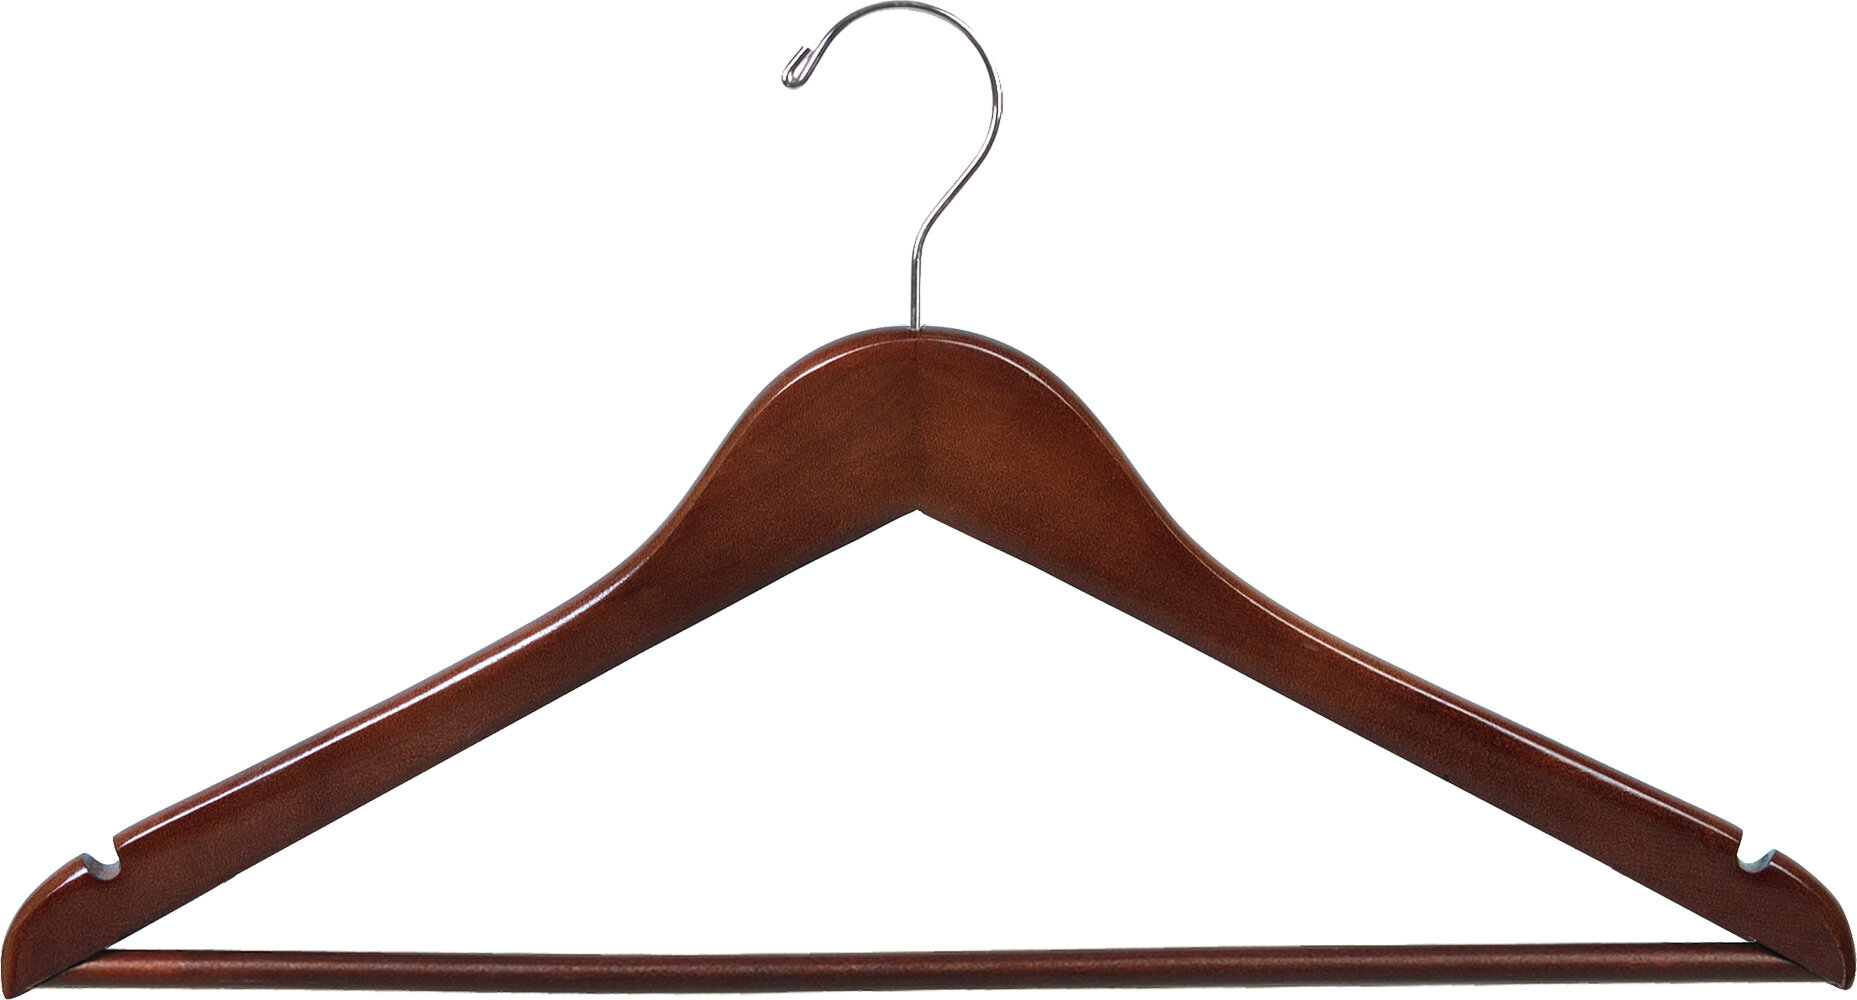 Solid Walnut Wood Suit Hangers, 60 Pack - AliExpress